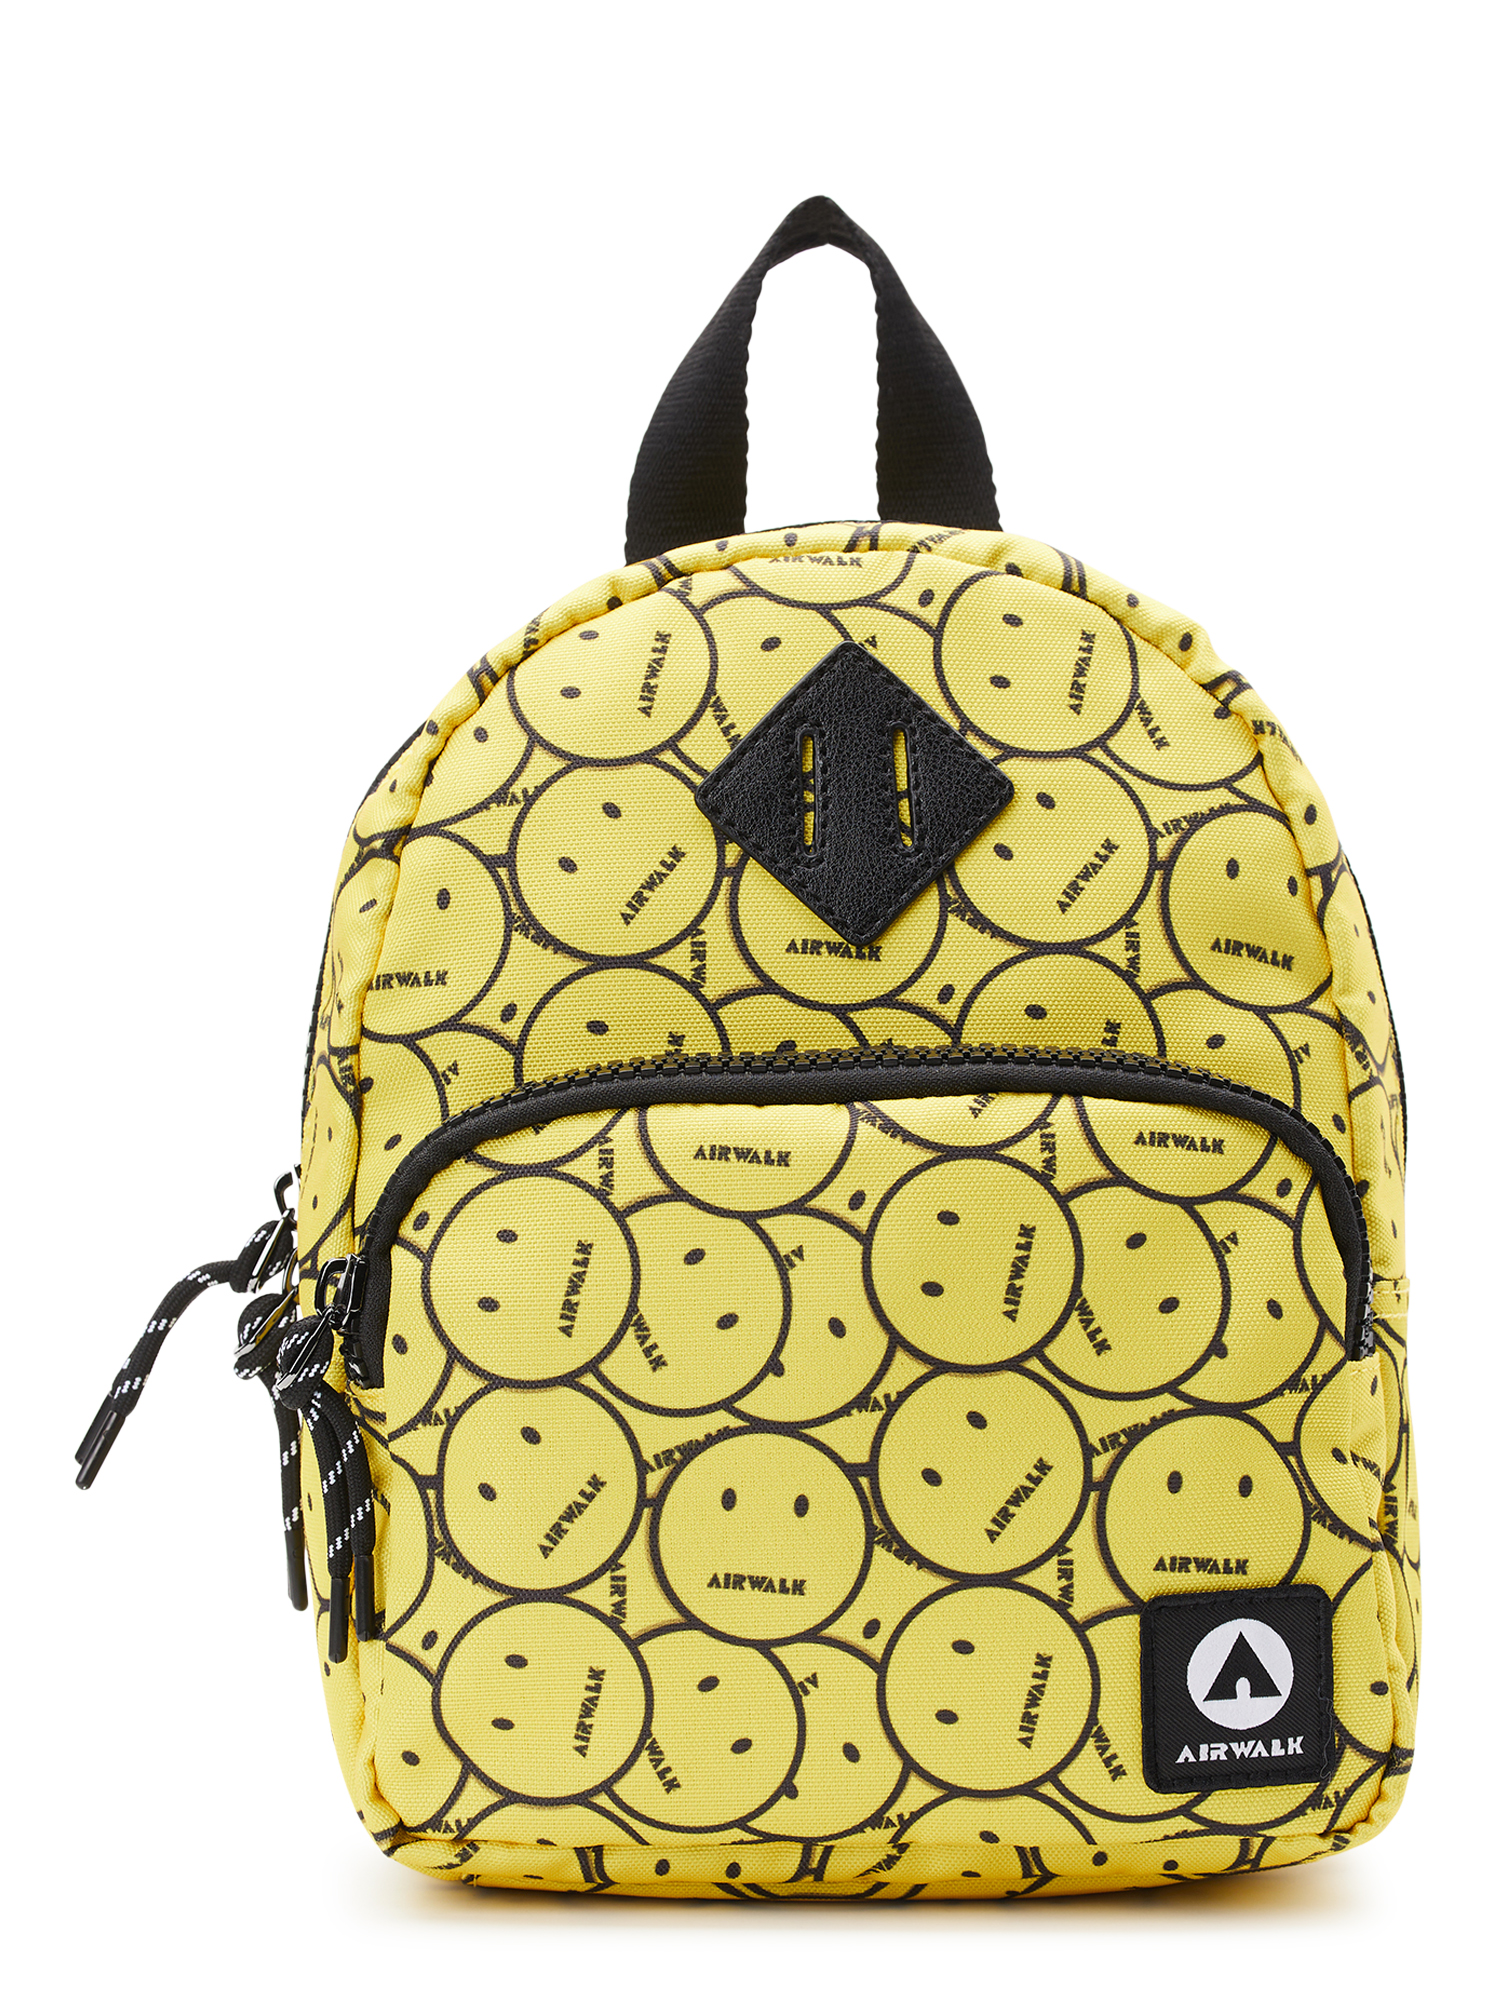 Airwalk Unisex Mini 10" Backpack, Smiley Yellow - image 1 of 6